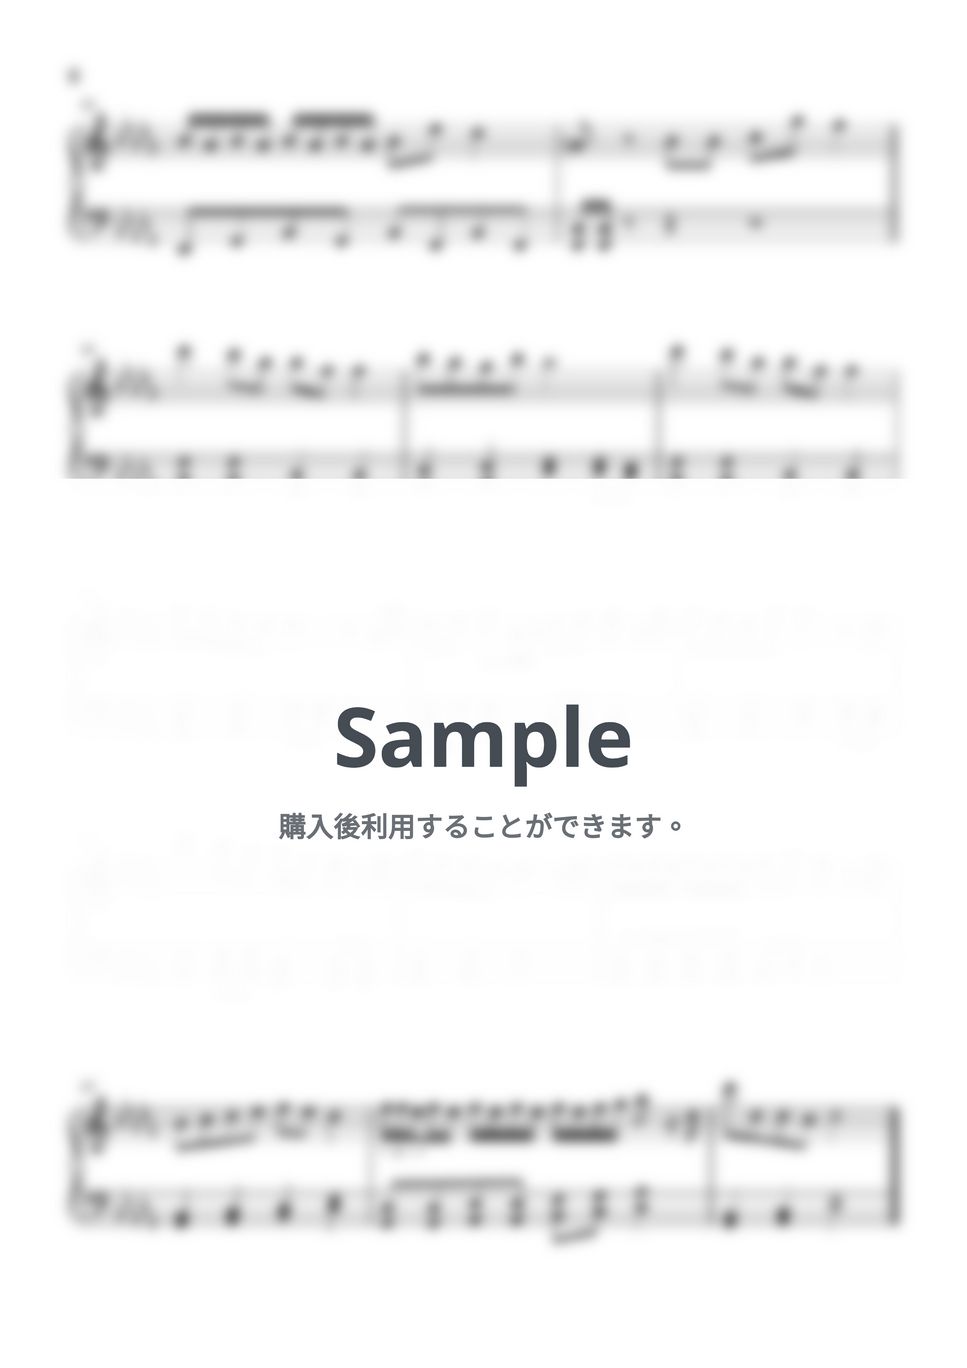 Da-iCE - CITRUS (ピアノ初心者向け / short ver.) by Piano Lovers. jp